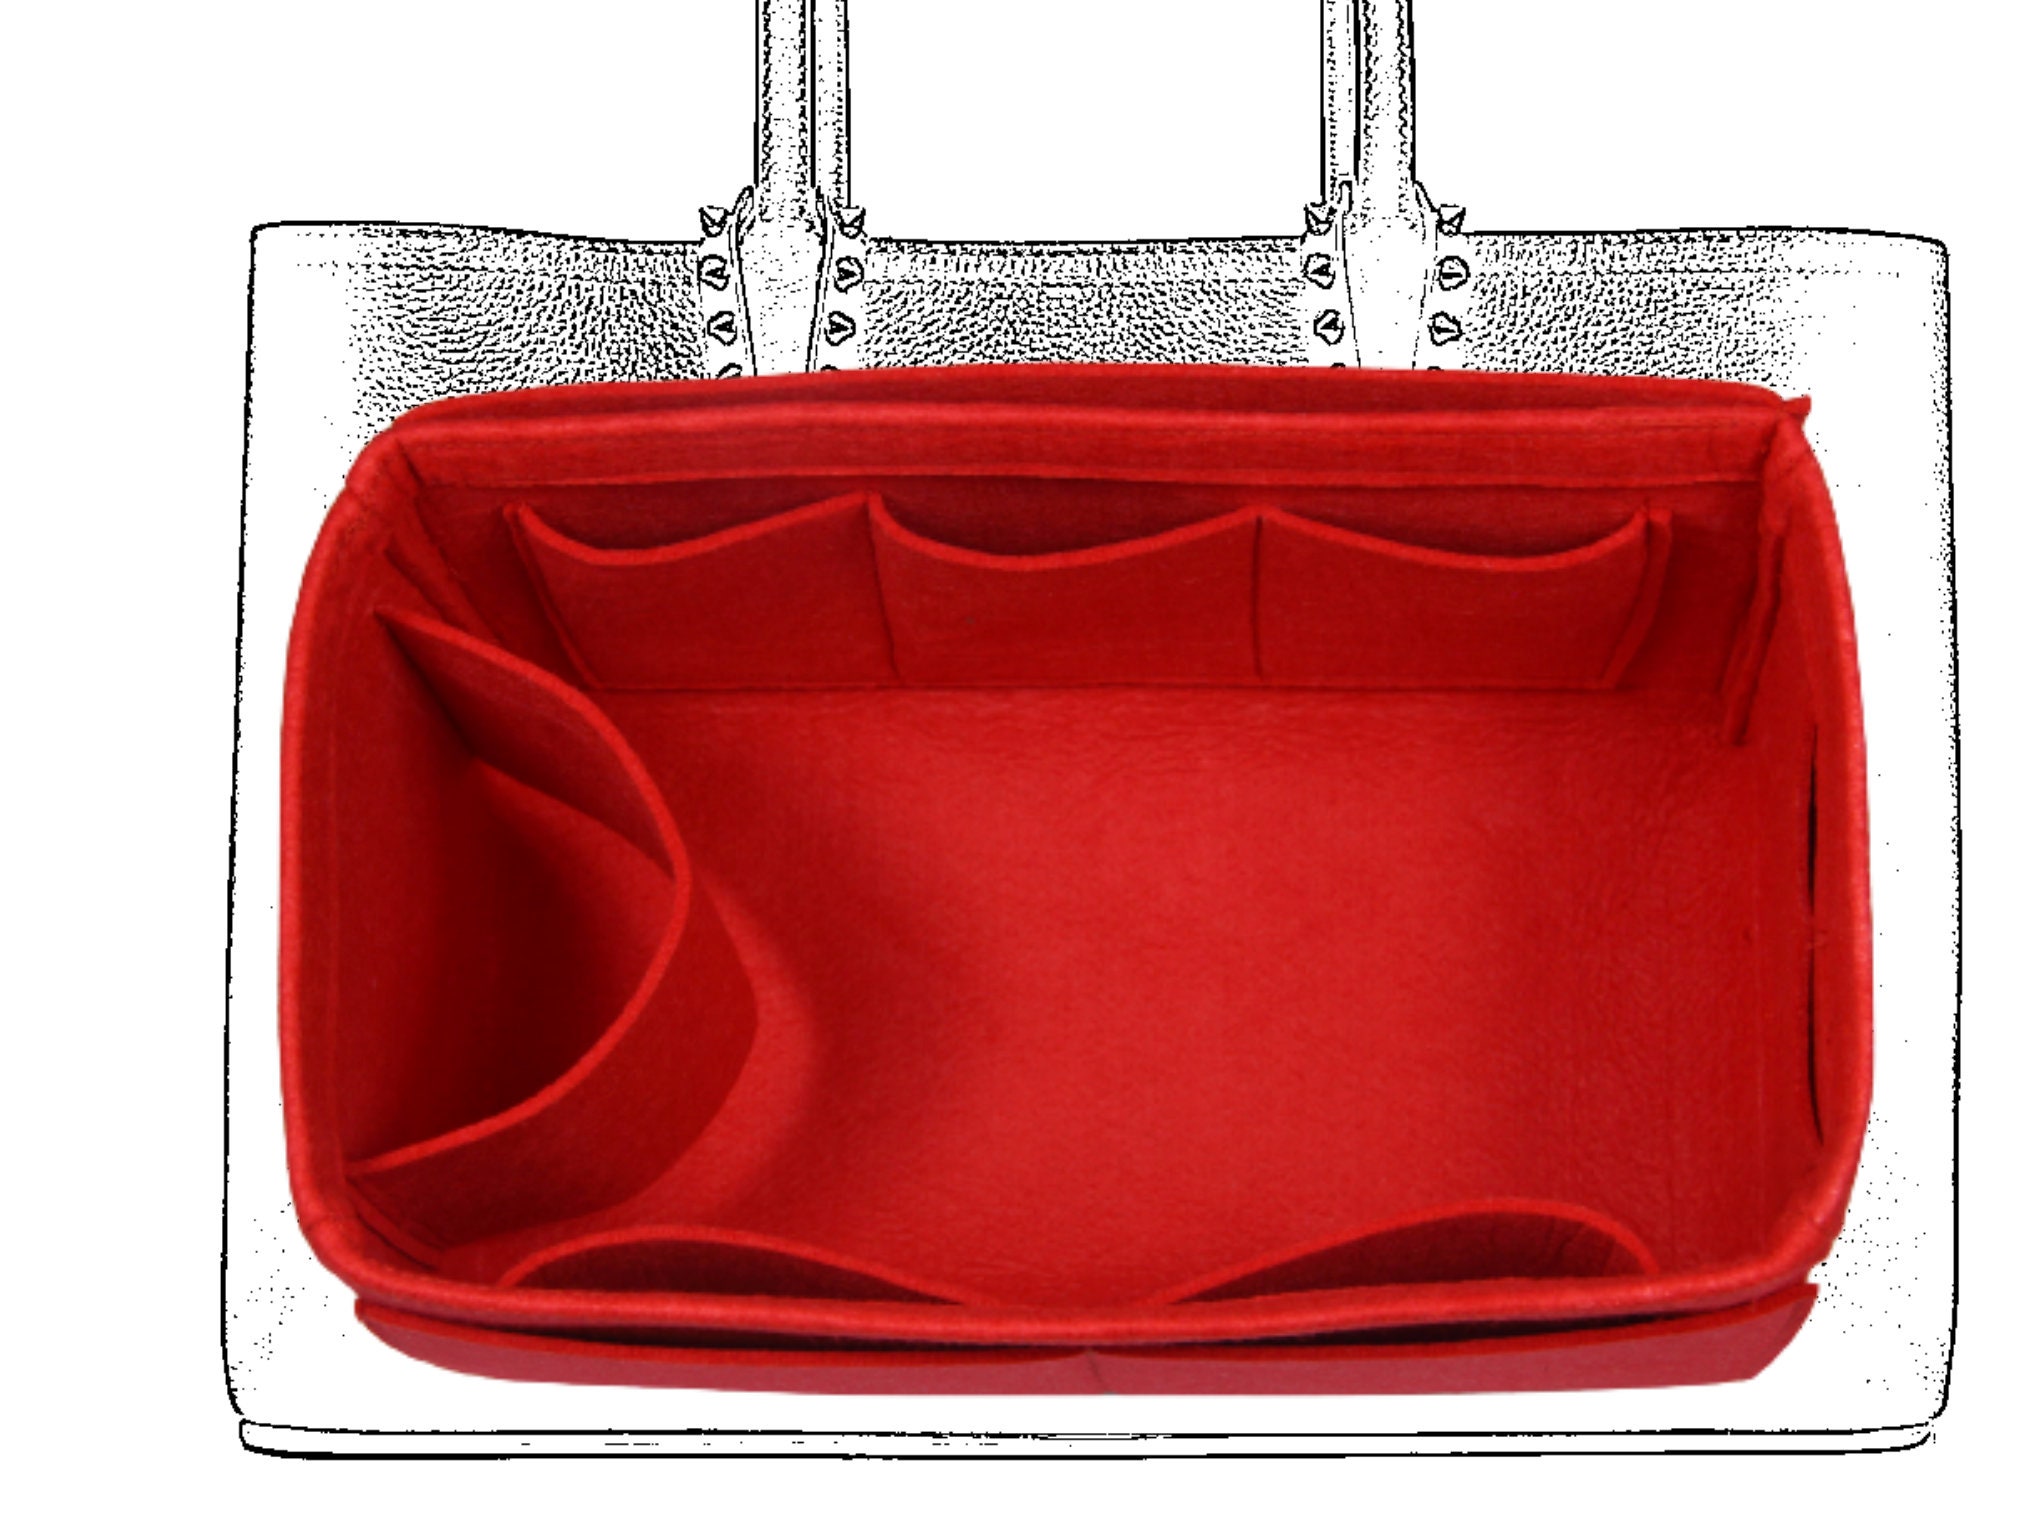  Zoomoni Premium Bag Organizer for Hermes Jypsiere 28  (Handmade/20 Color Options) [Purse Organiser, Liner, Insert, Shaper] :  Handmade Products